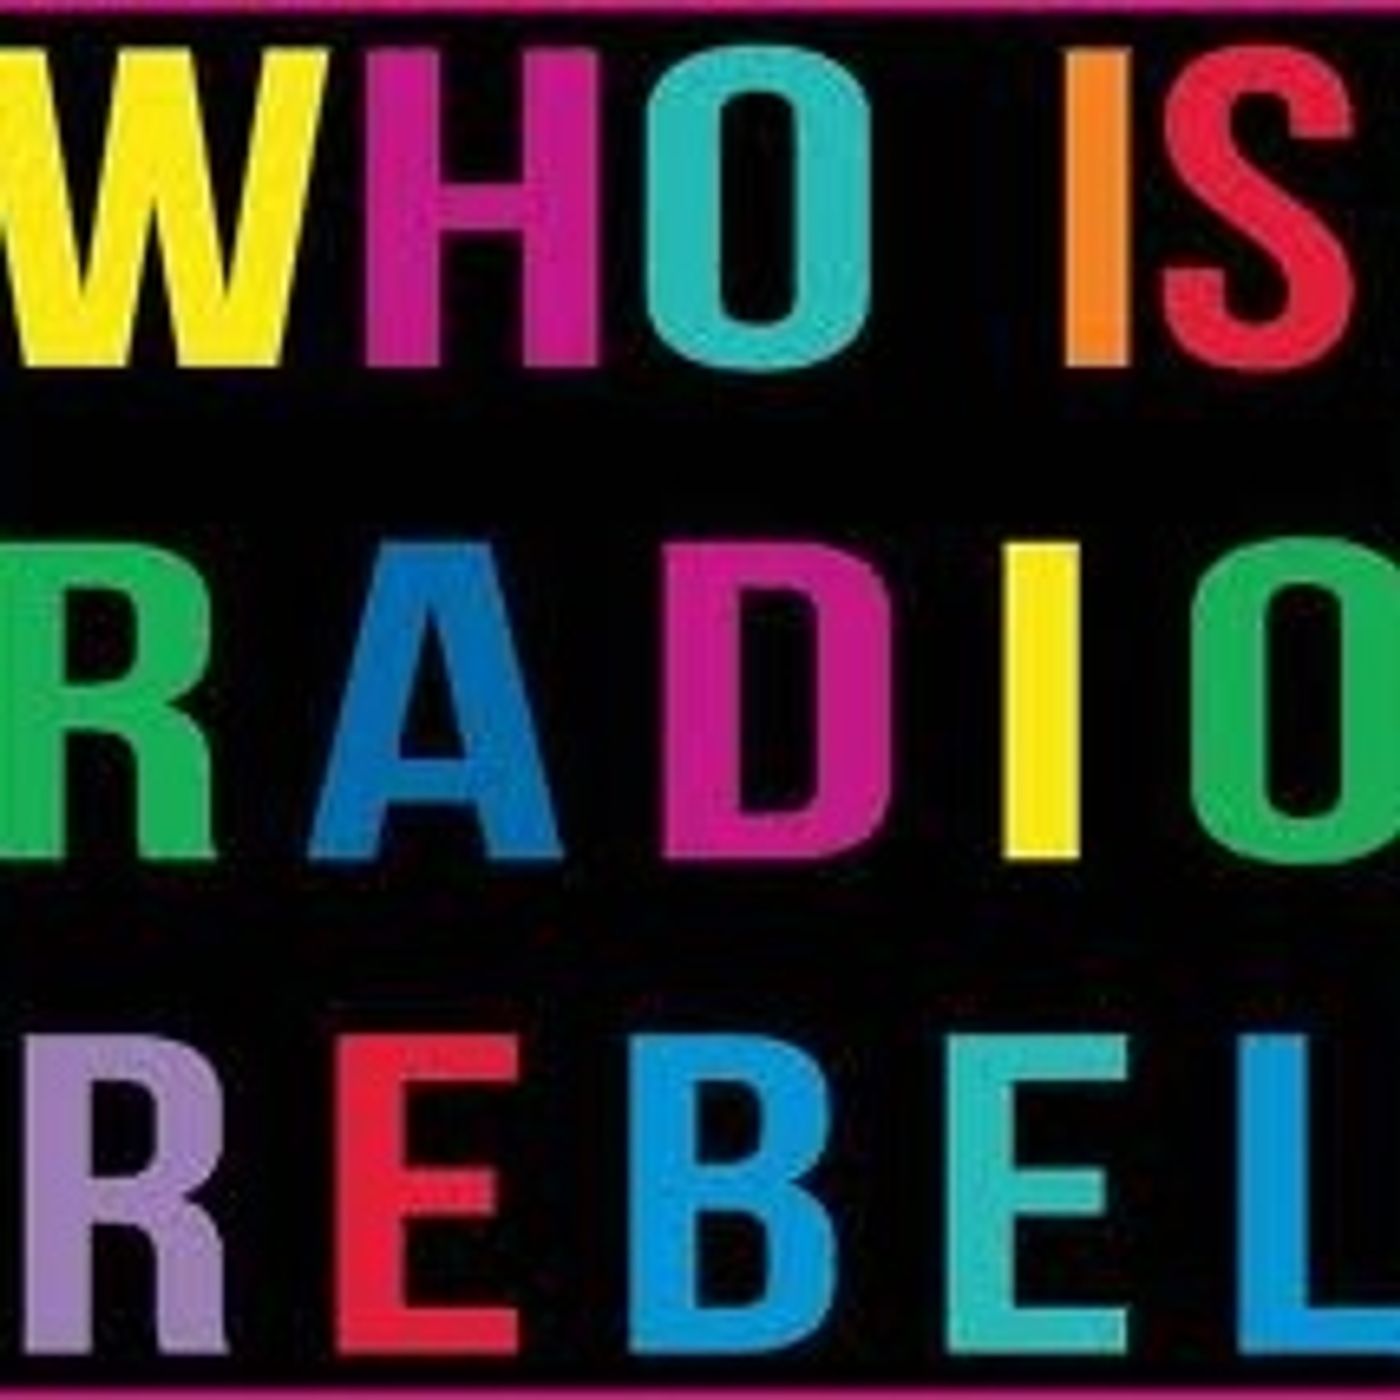 The Radio Rebel's tracks